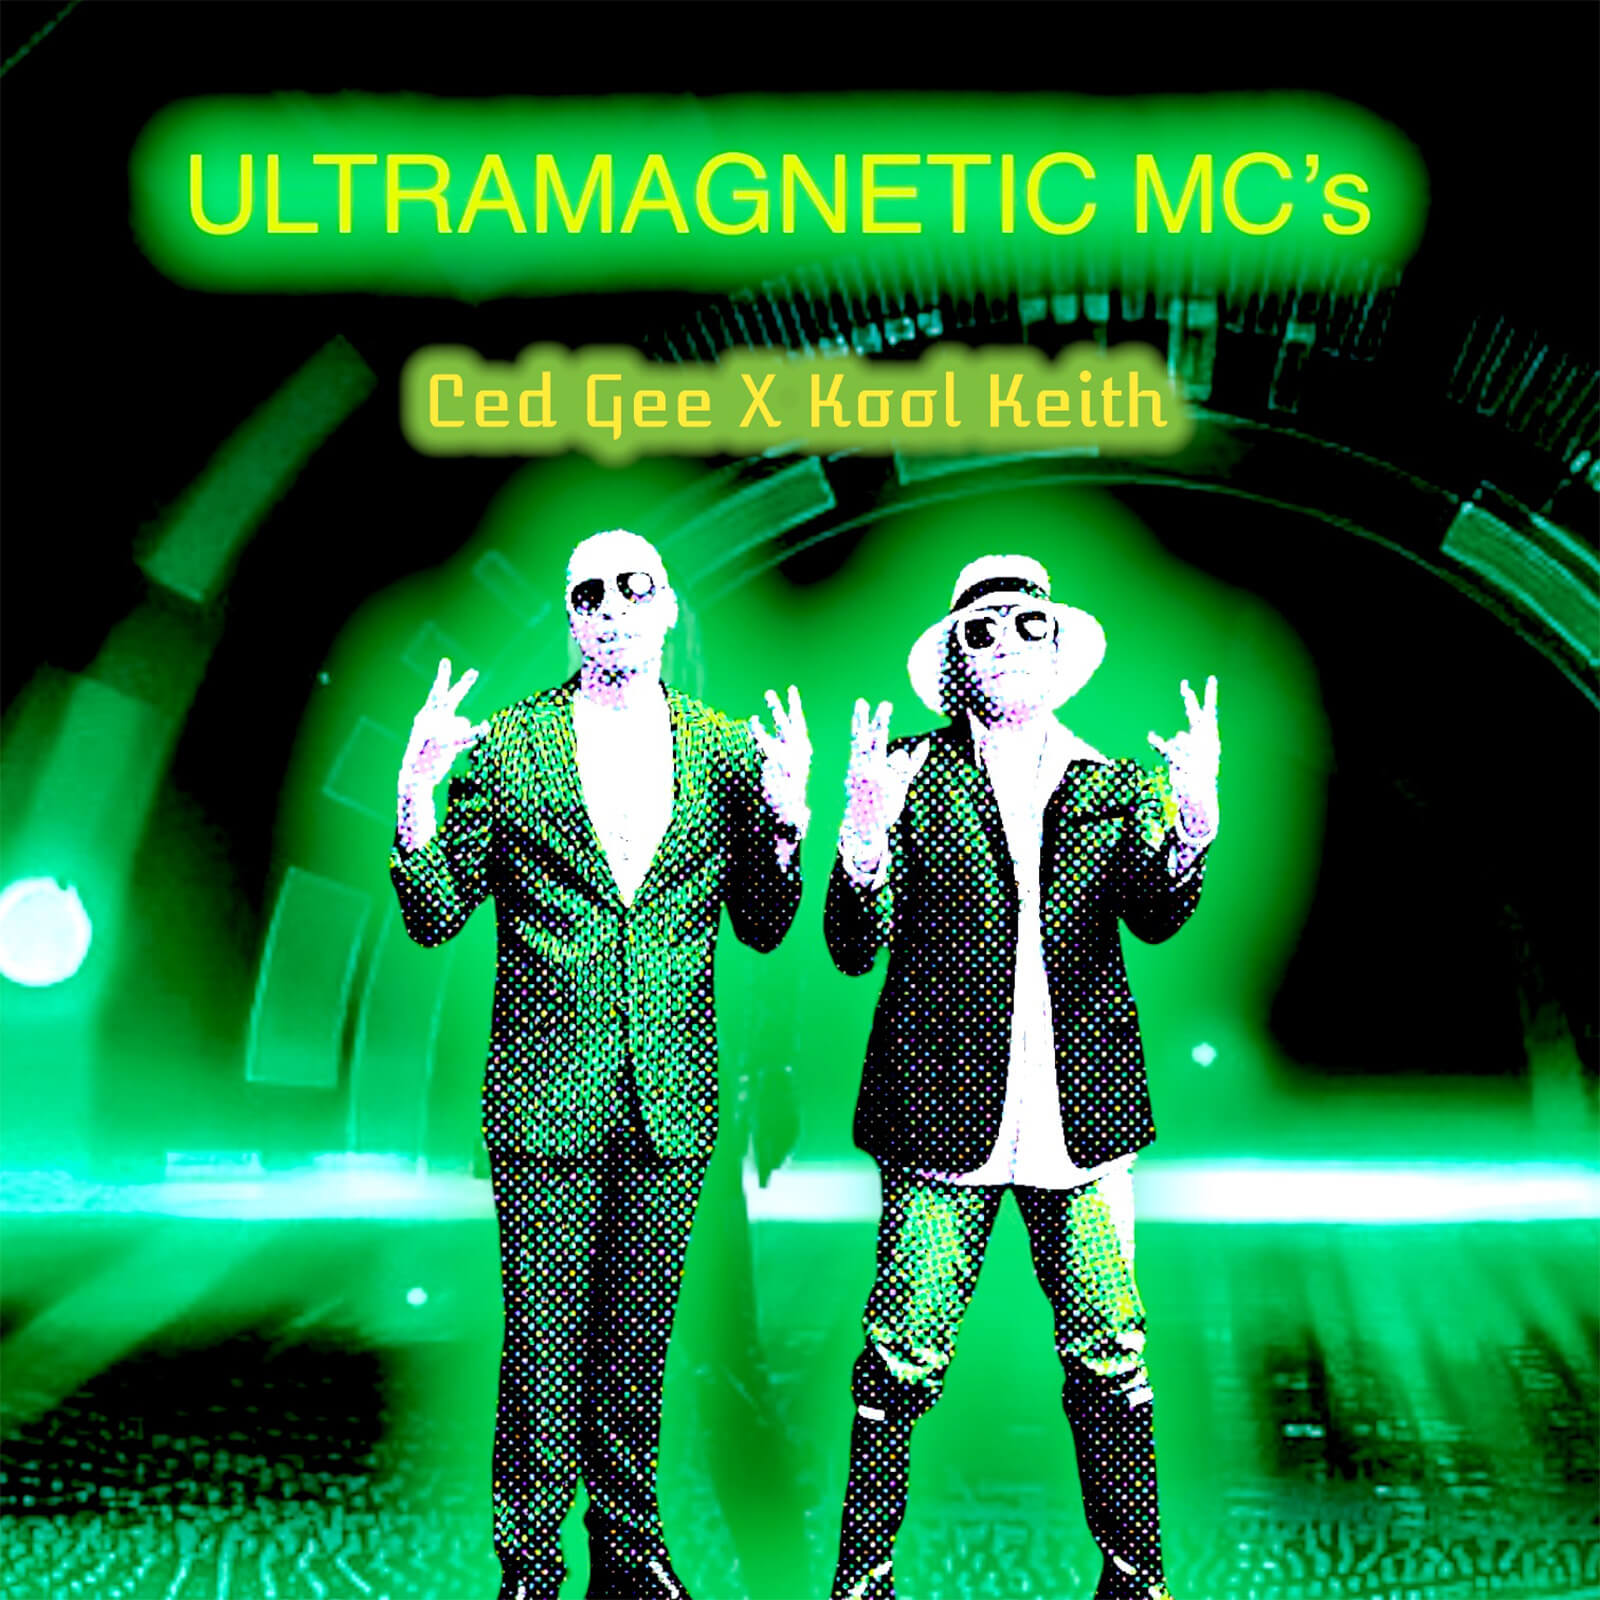 Ultramagnetic MC's - Ced Gee X Kool Keith LP